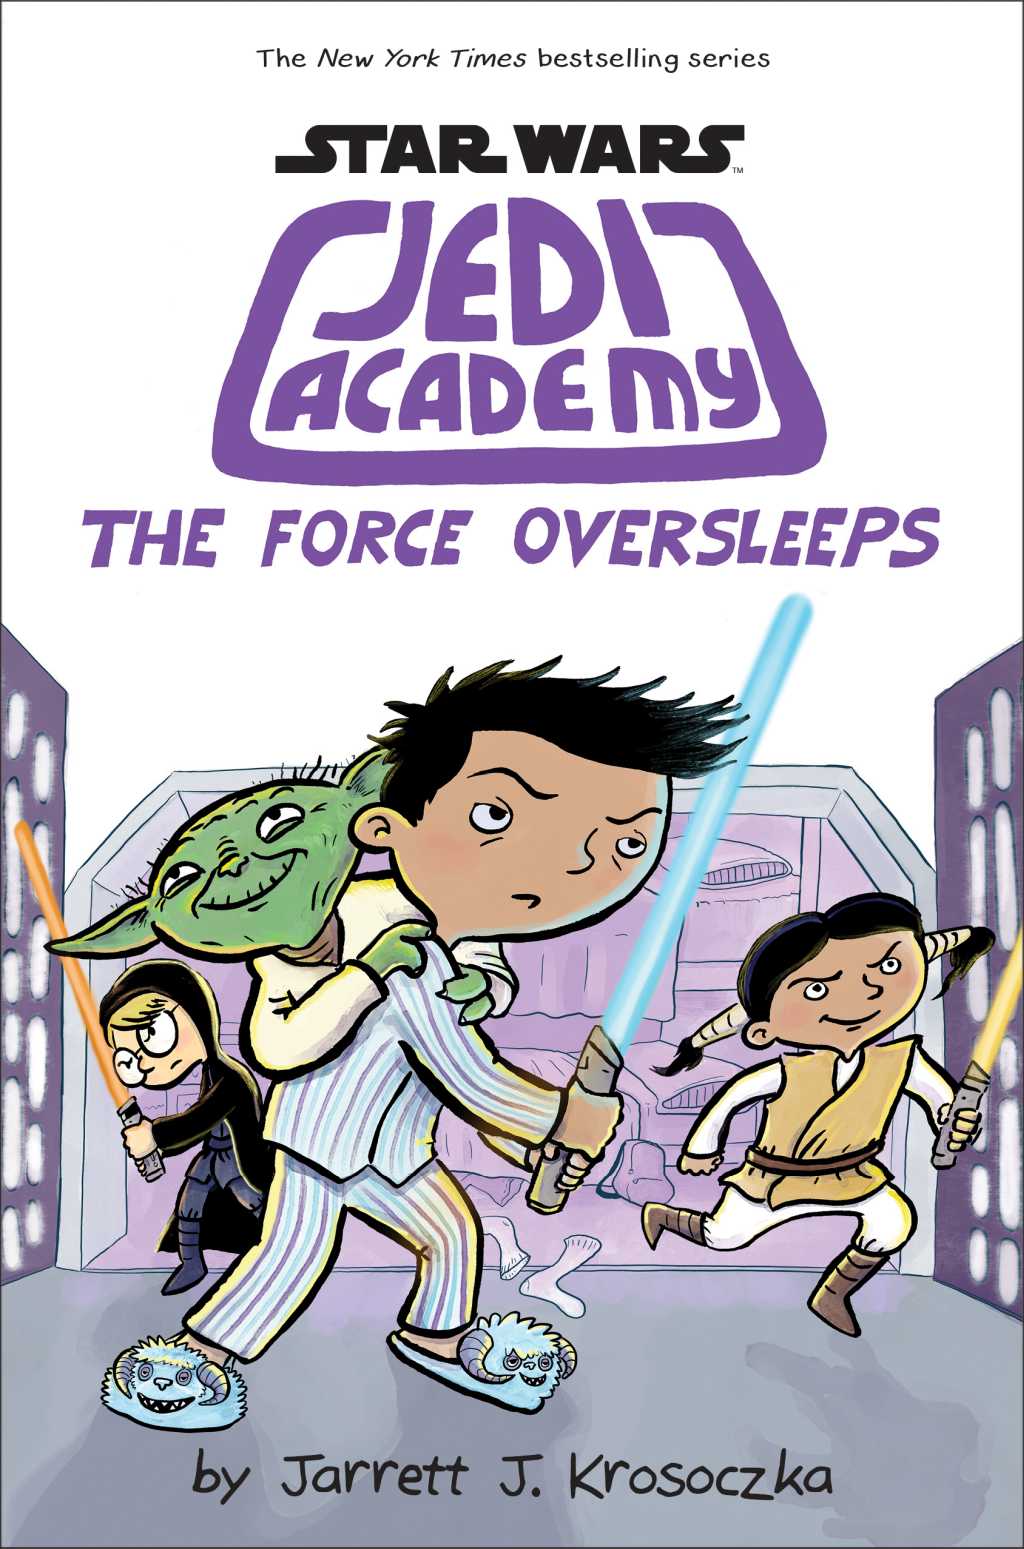 Okładka tomu V - Jedi Academy: The Force Oversleeps.